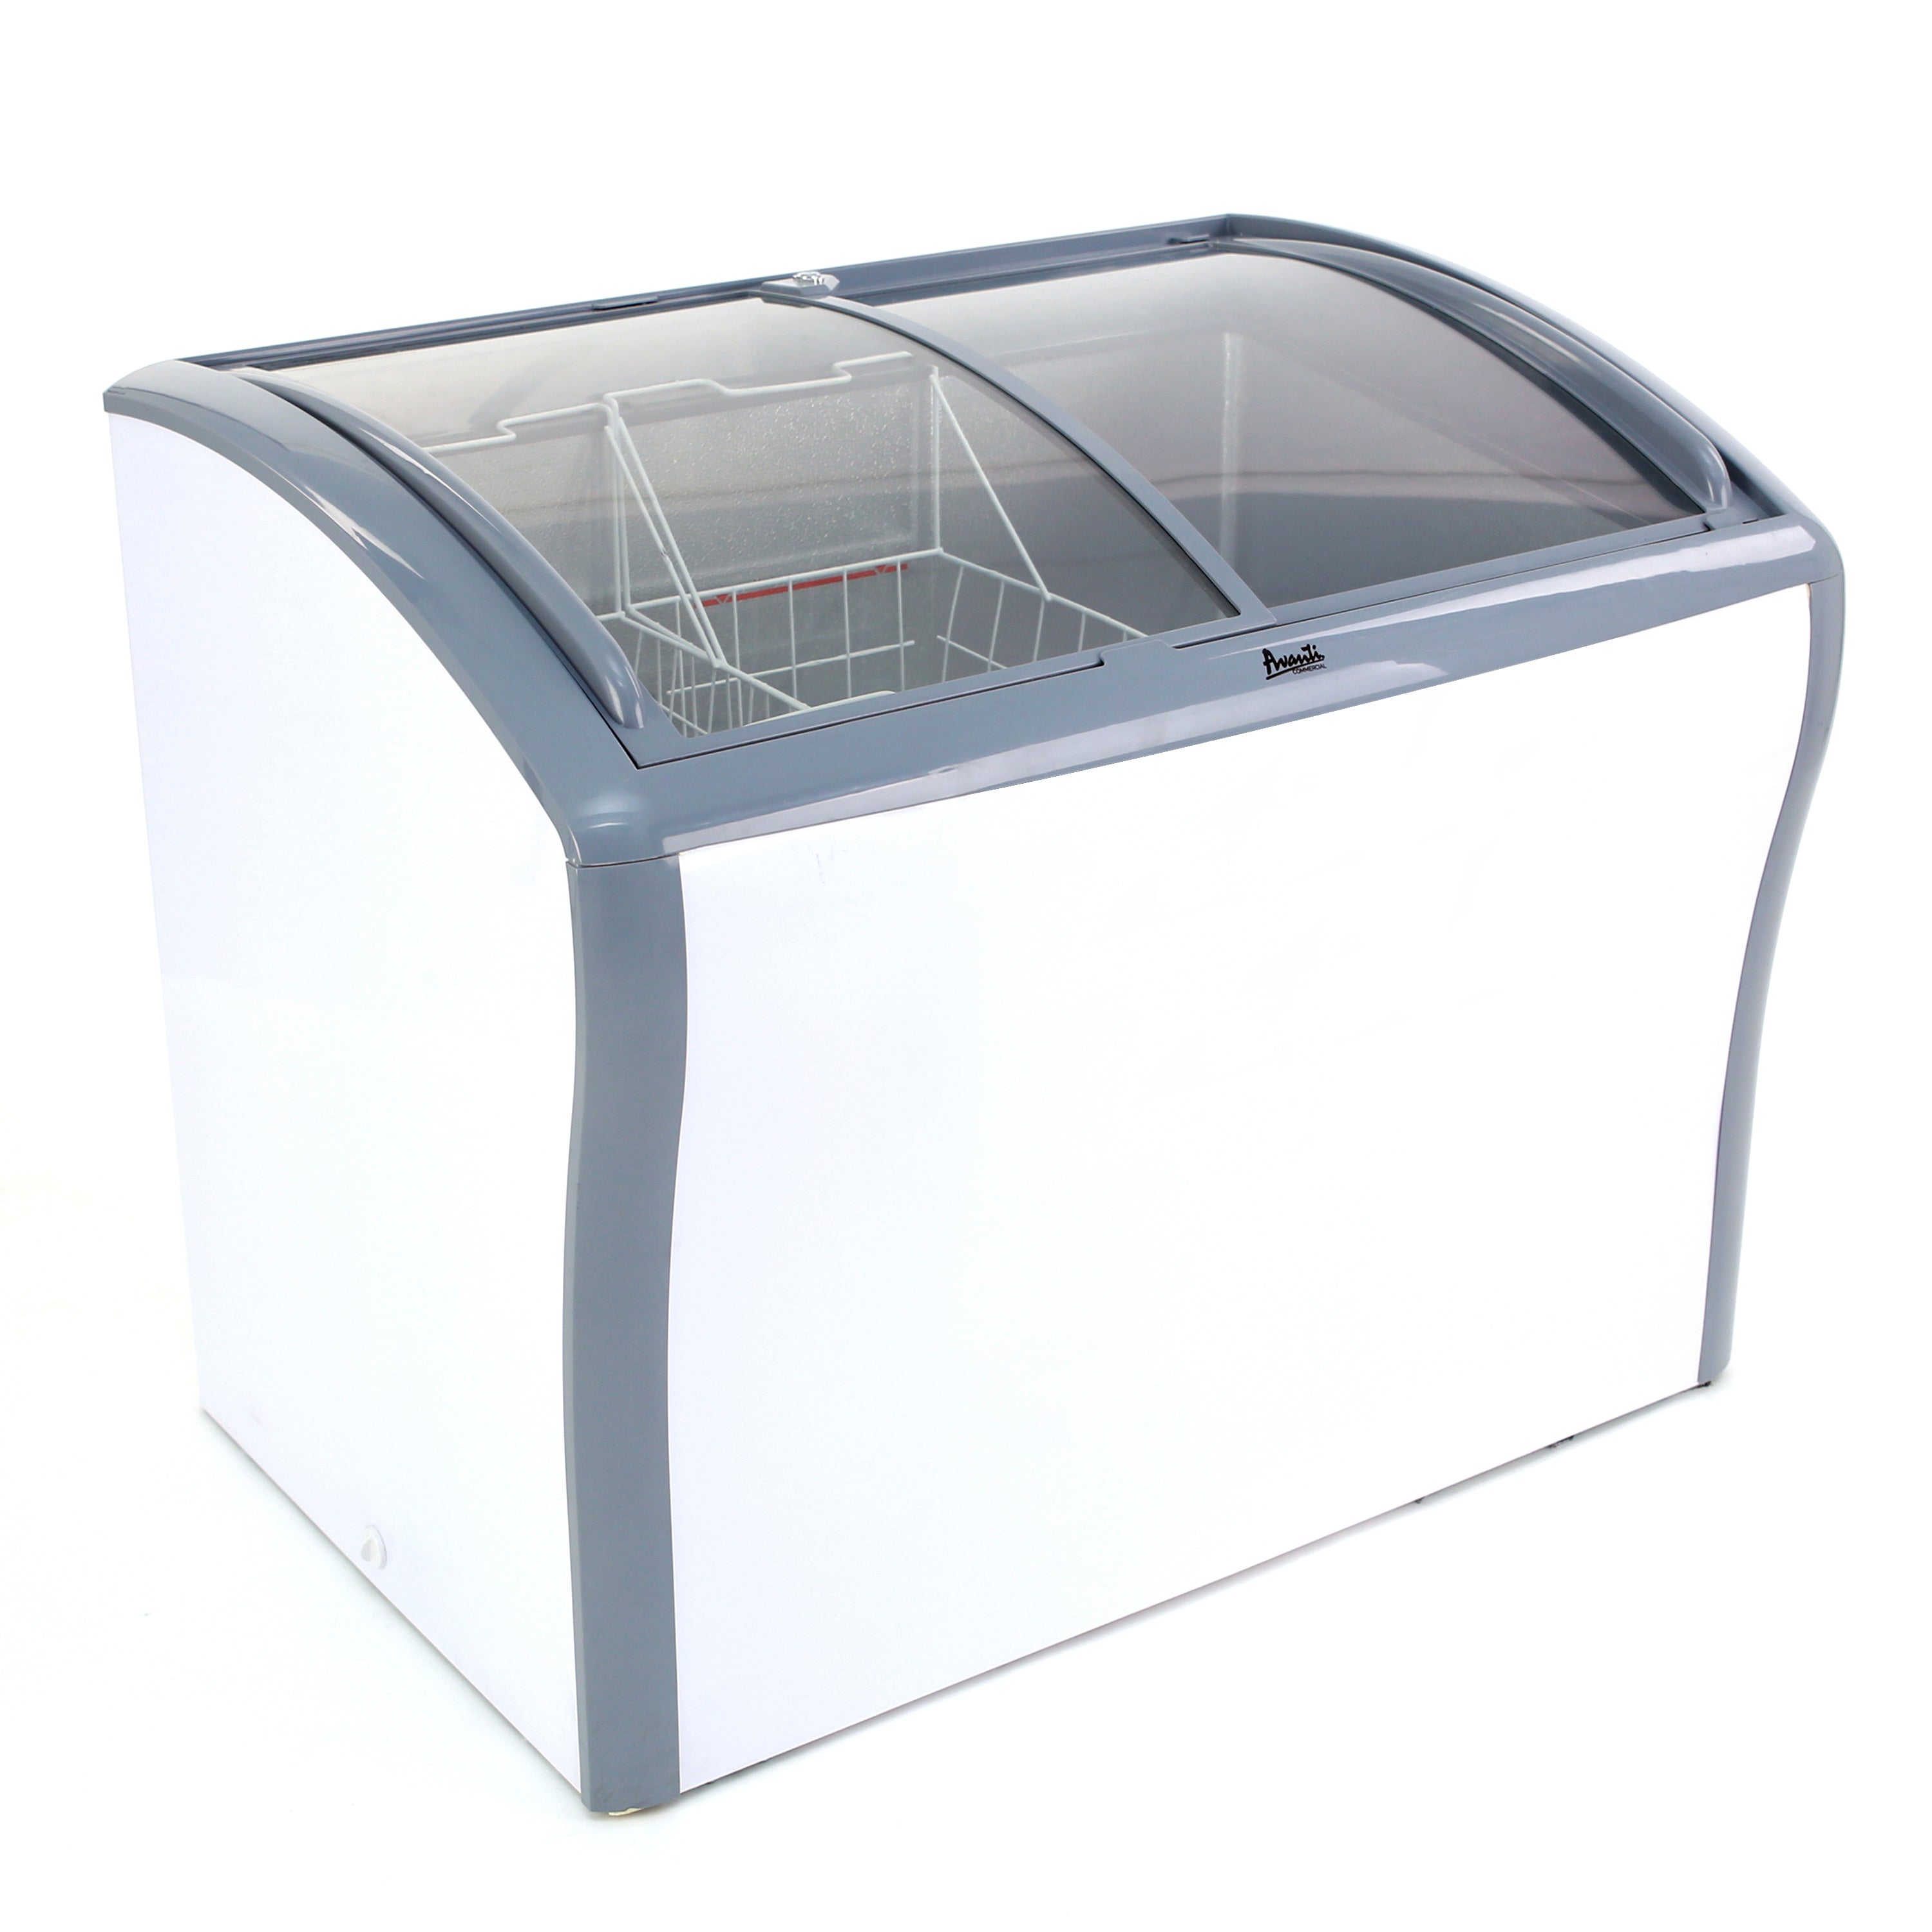 Avanti - CFC836Q0WG, Avanti 9.5 cu. ft. Commercial Glass Top Freezer or Refrigerator, in White